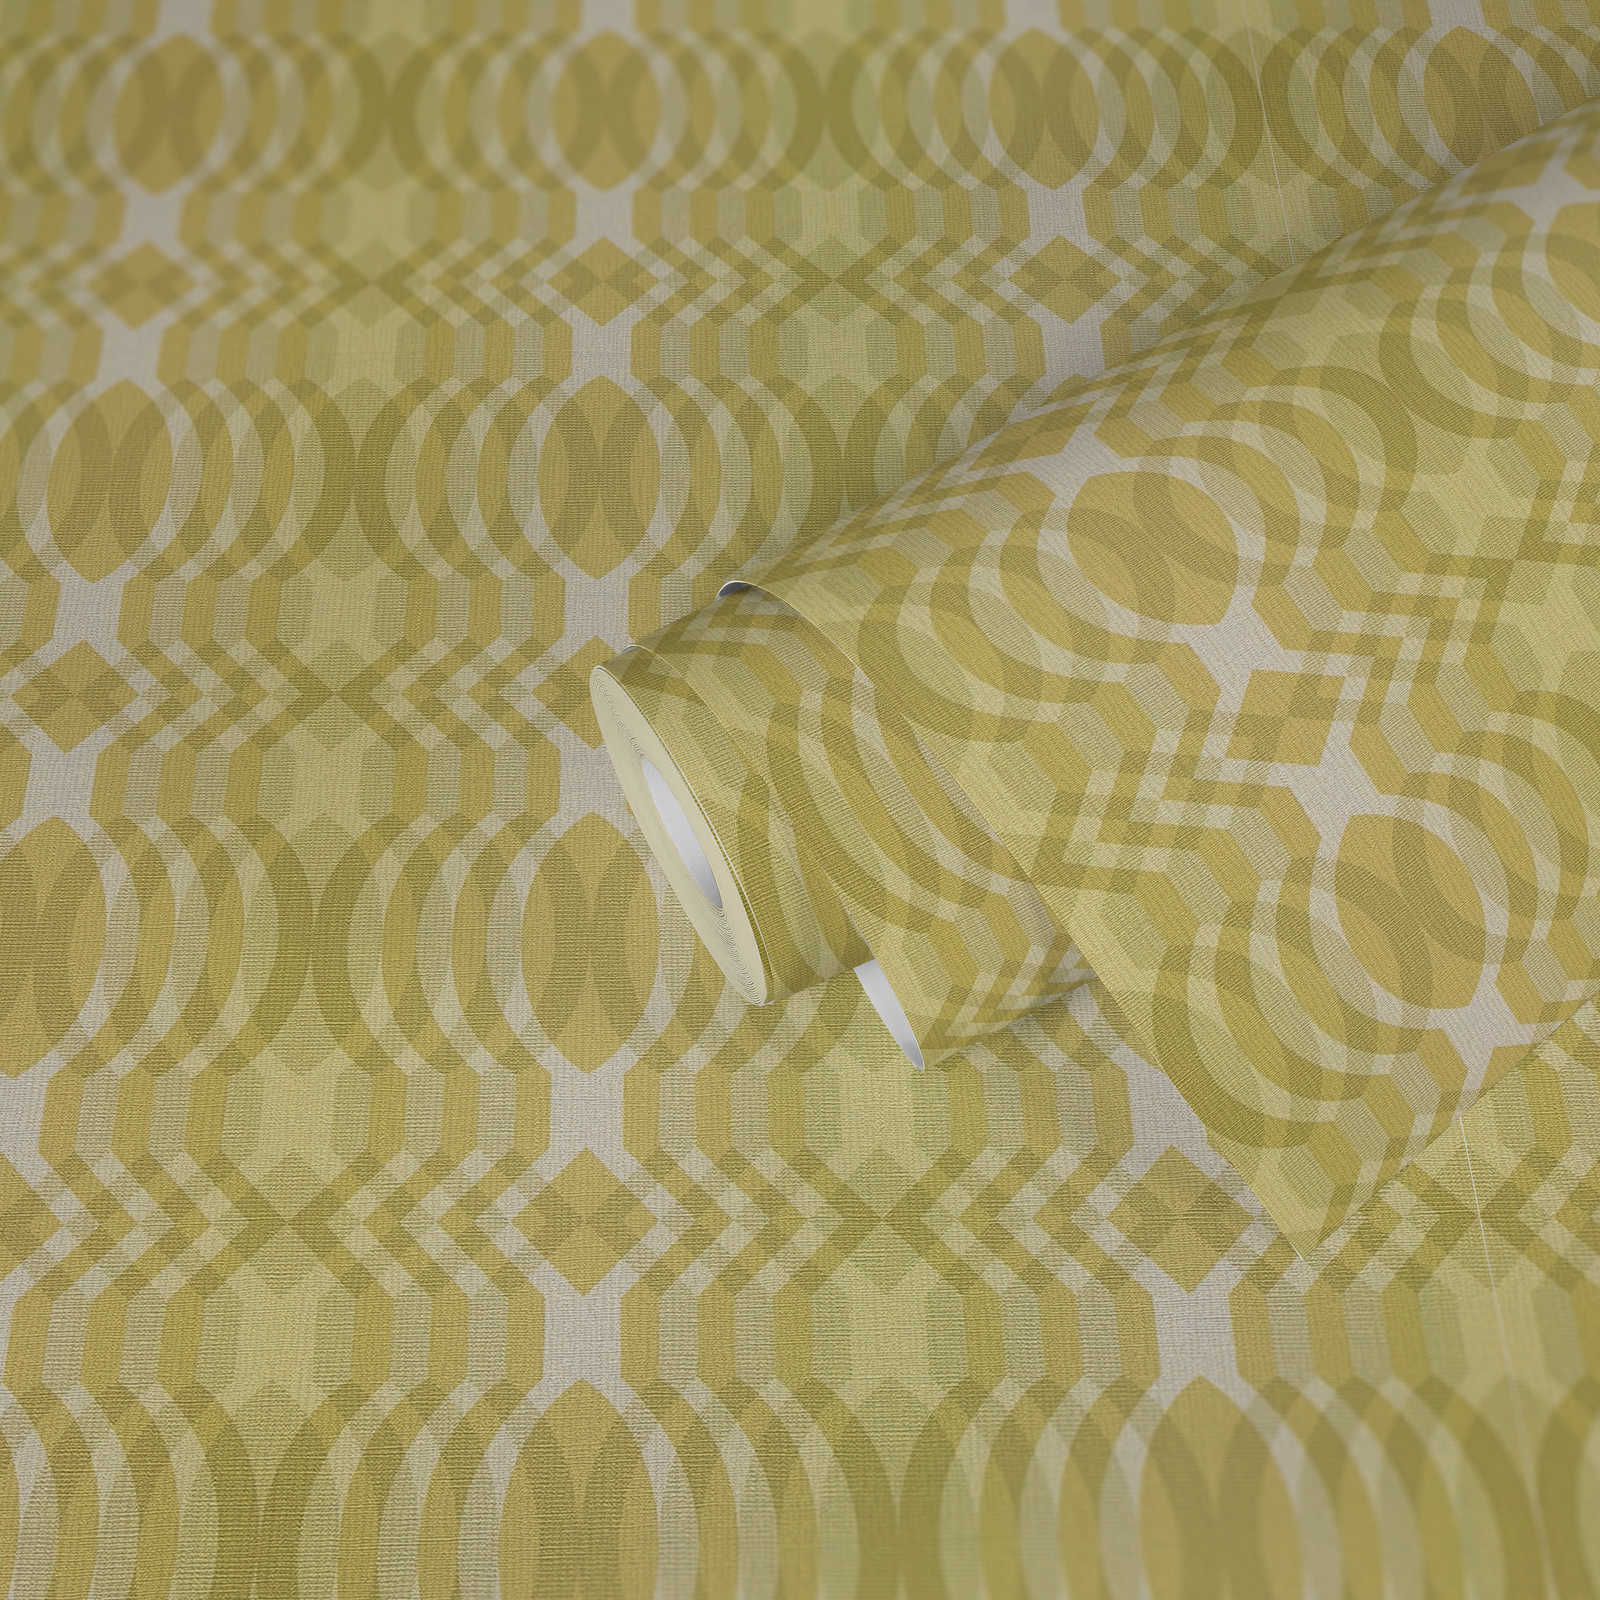             Non-woven wallpaper in retro style with geometric pattern - green, cream, white
        